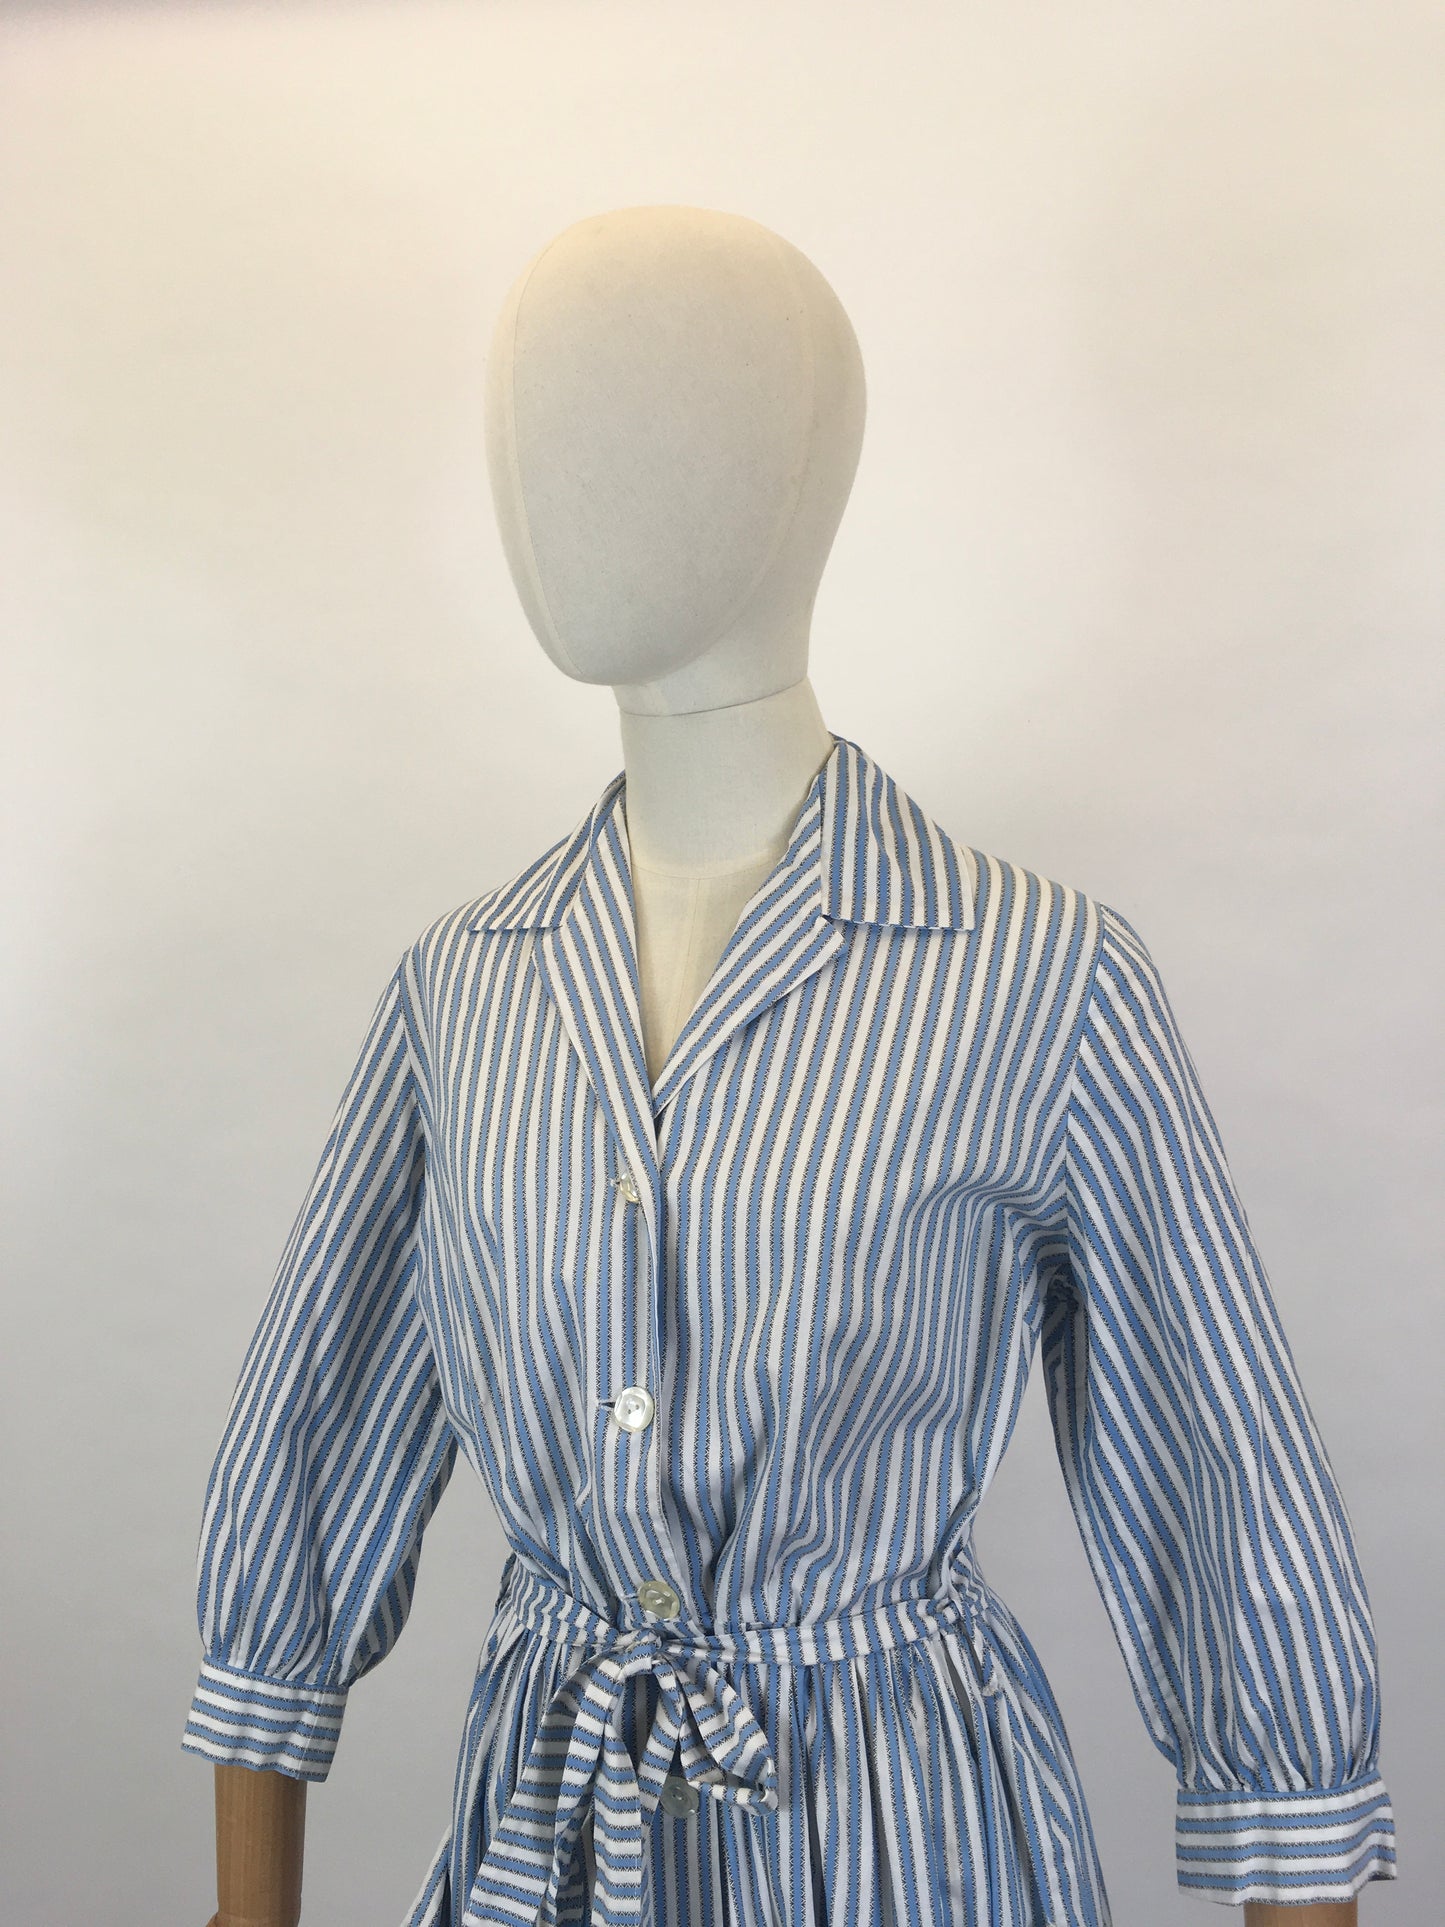 Original 1950’s Darling Blue & White Shirtwaister Dress - With A Classic 50’s Silhouette